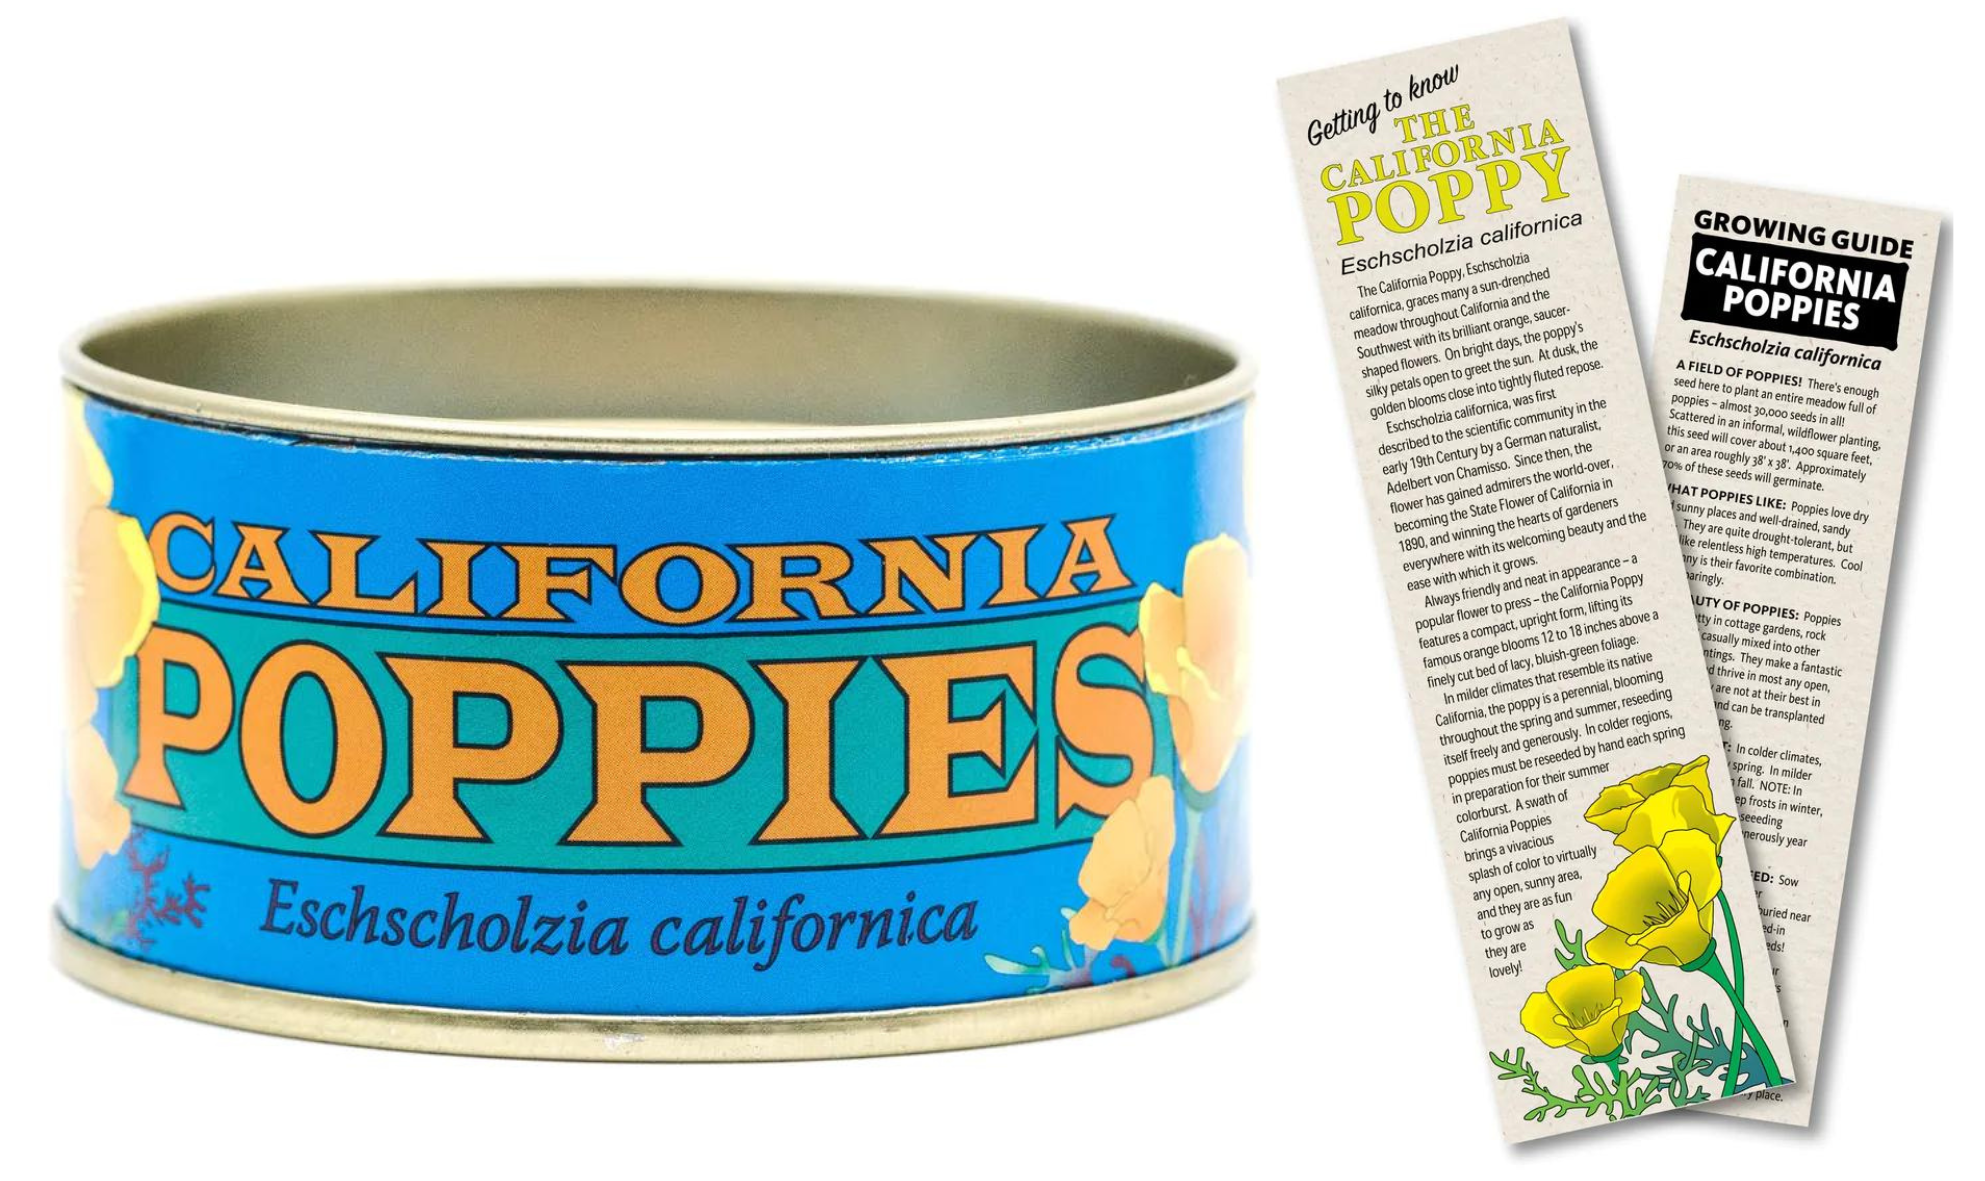 California Poppy Seed Kit Tin